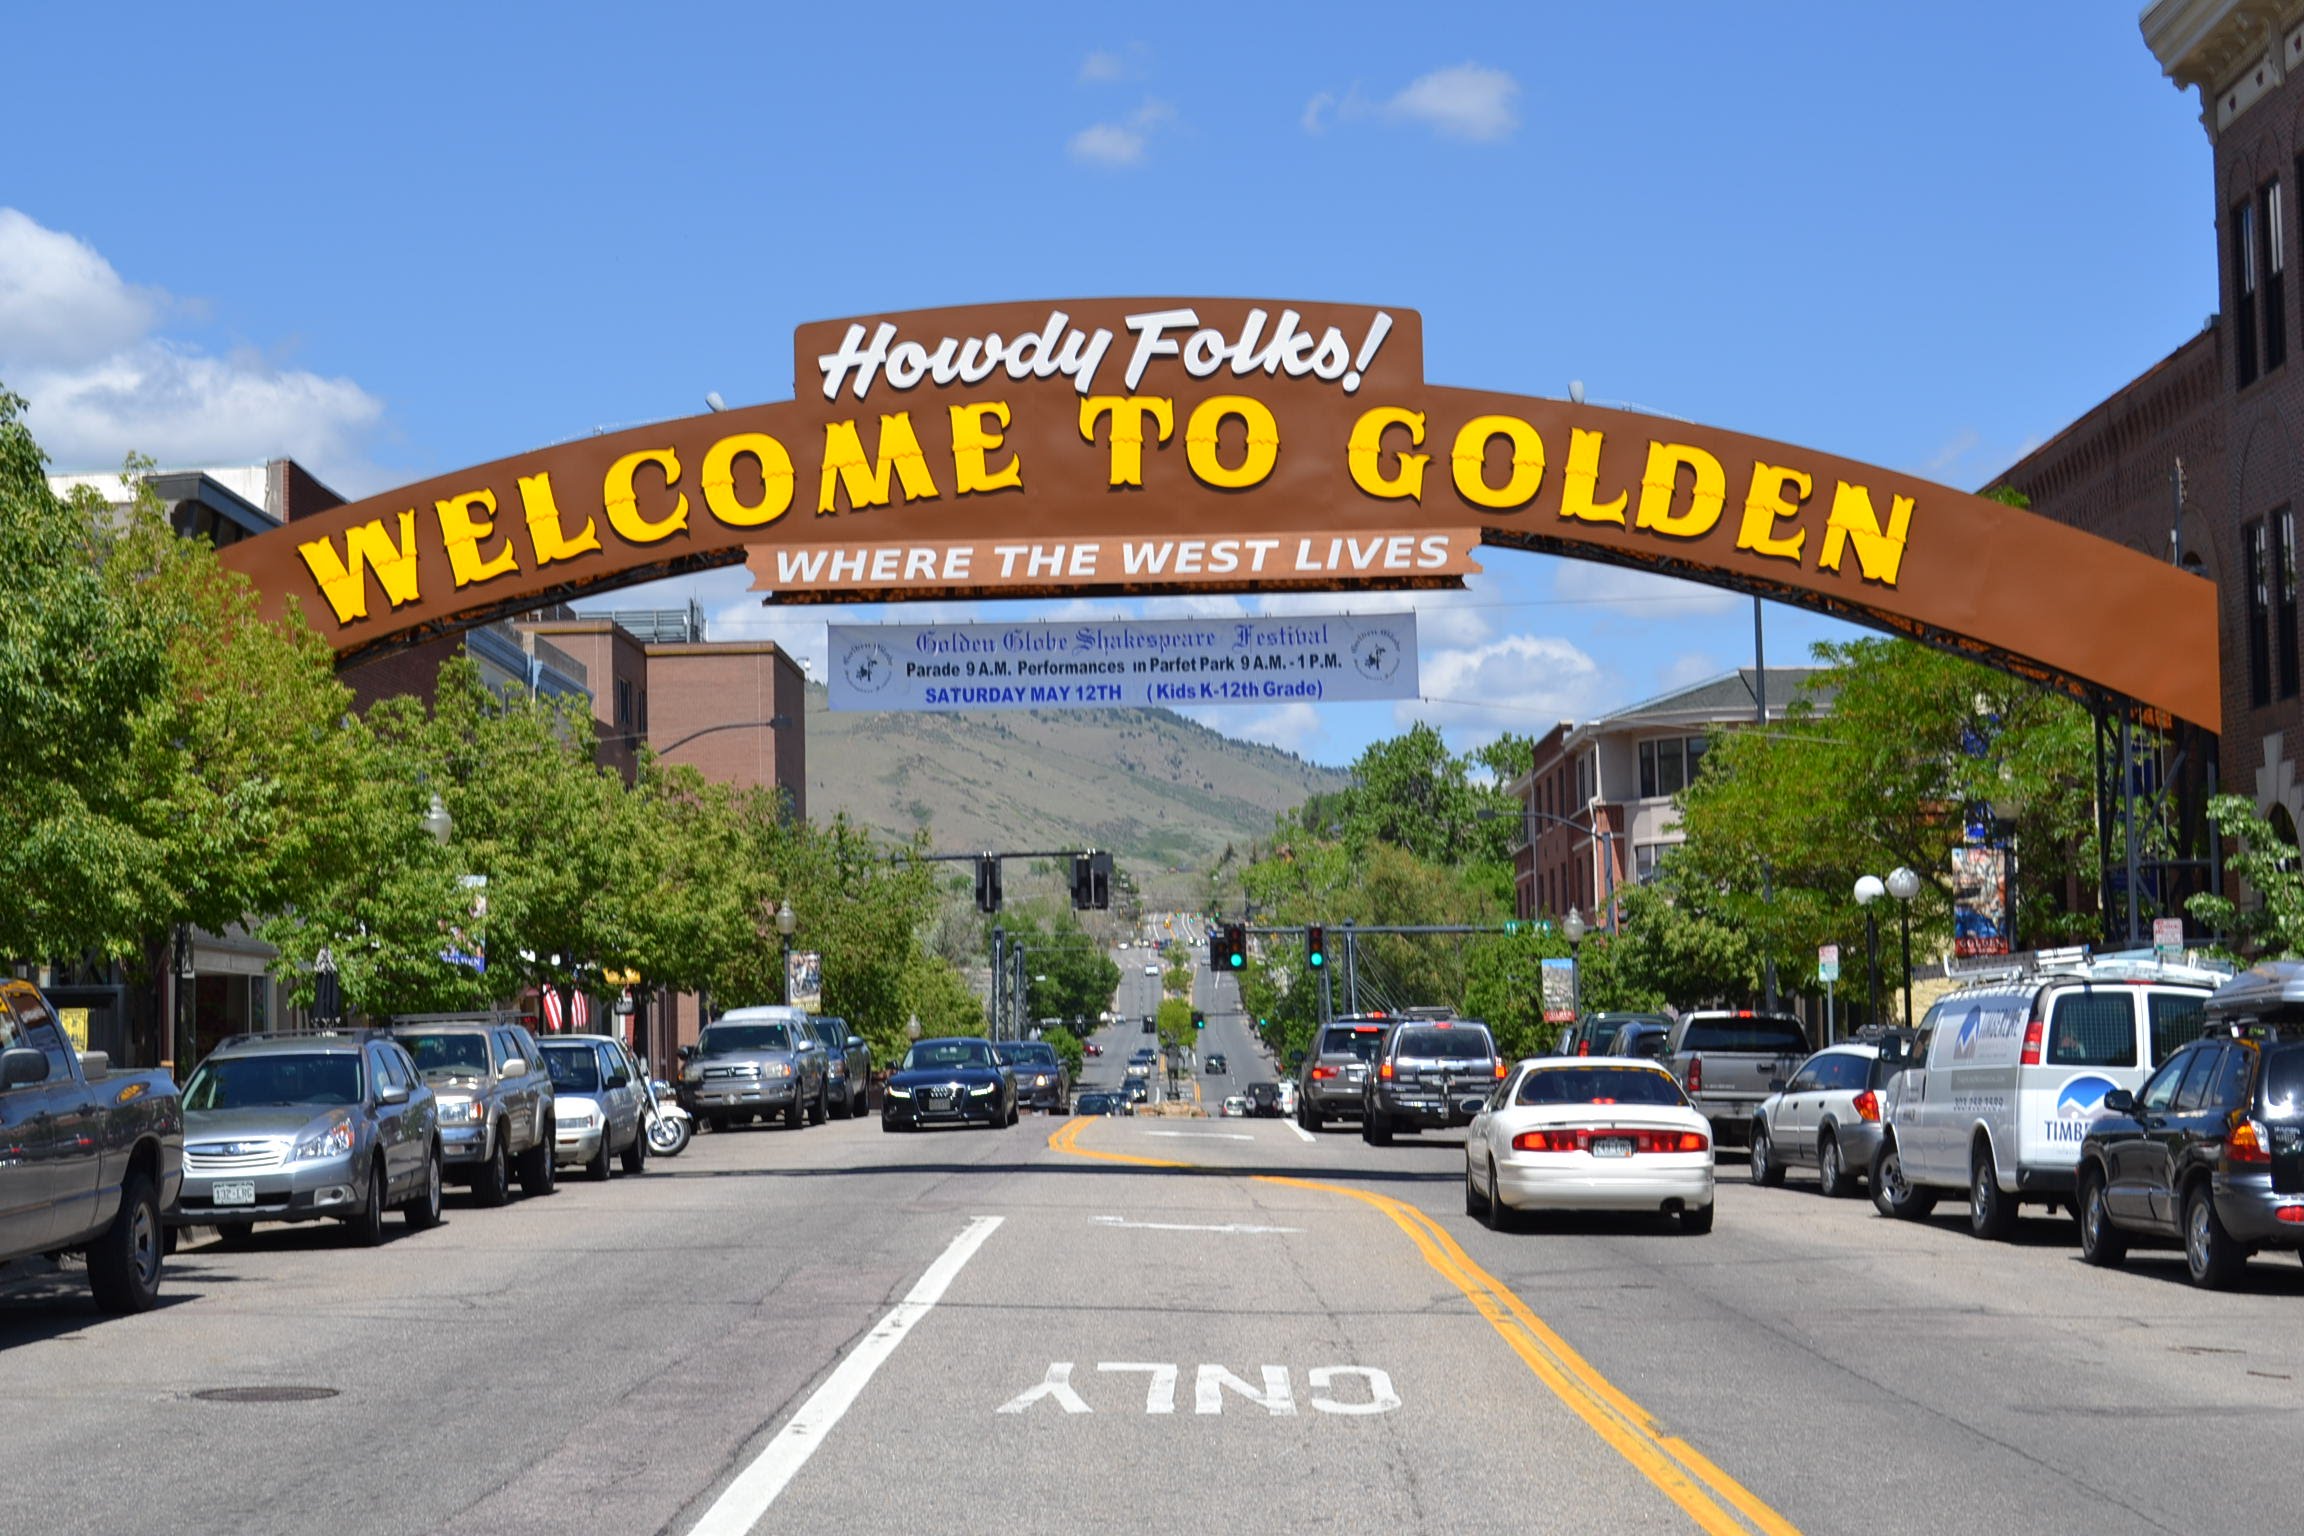 Dumpster Rentals in Golden, Colorado Sam's Hauling